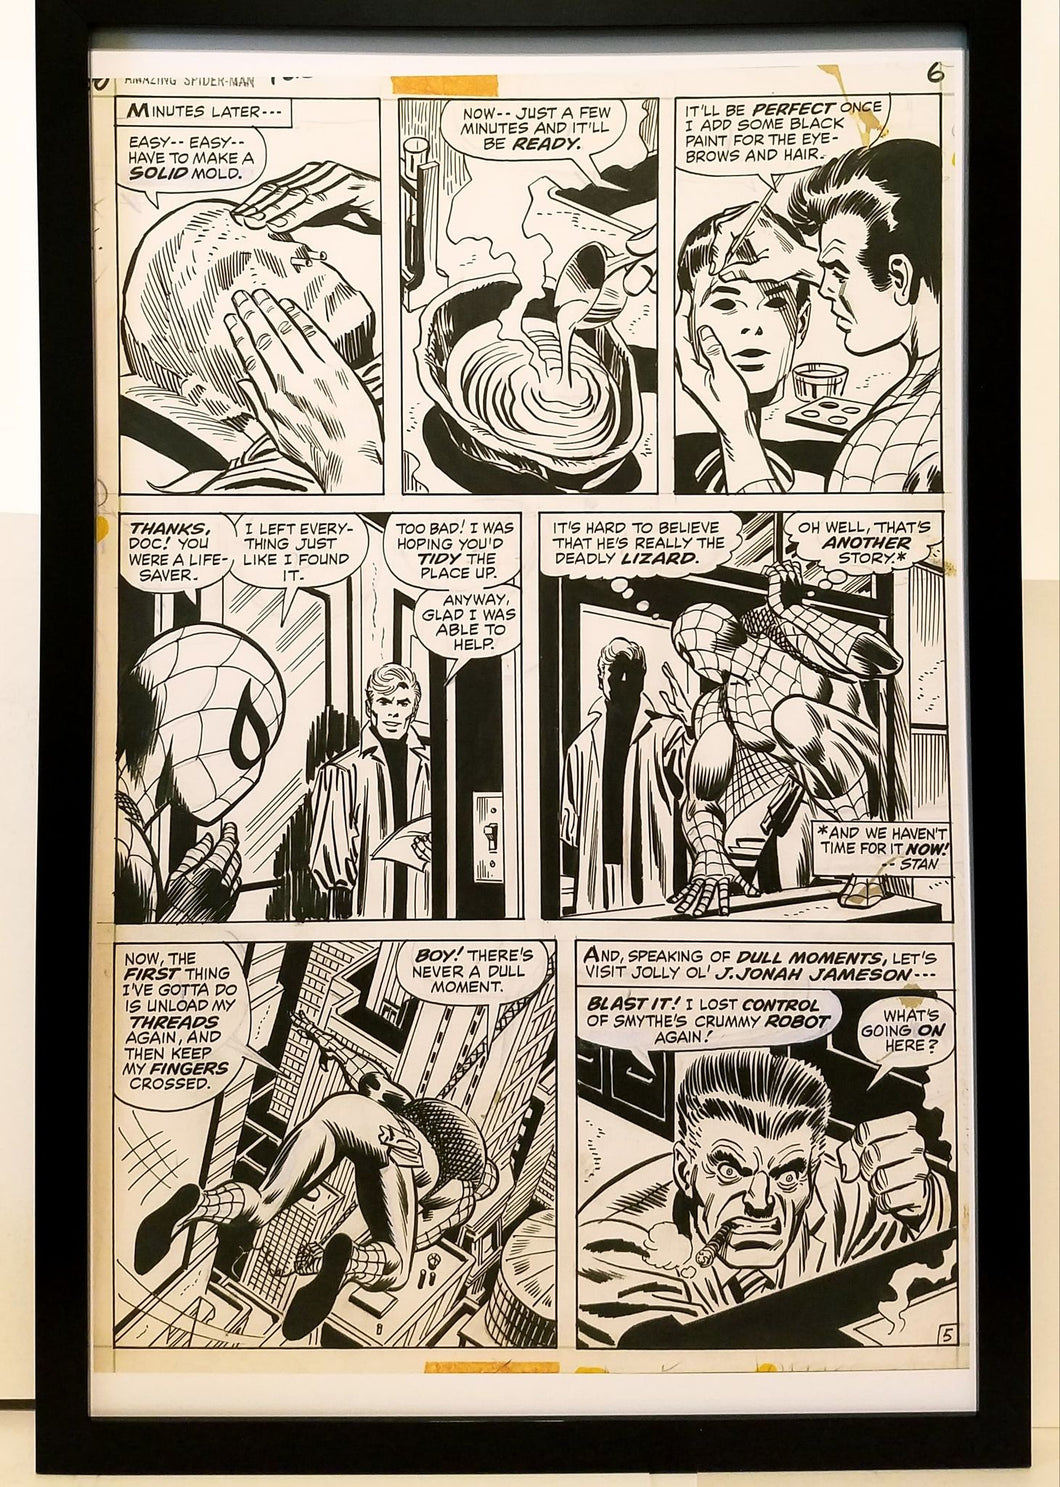 Amazing Spider-Man #106 pg. 5 John Romita 11x17 FRAMED Original Art Poster Marvel Comics